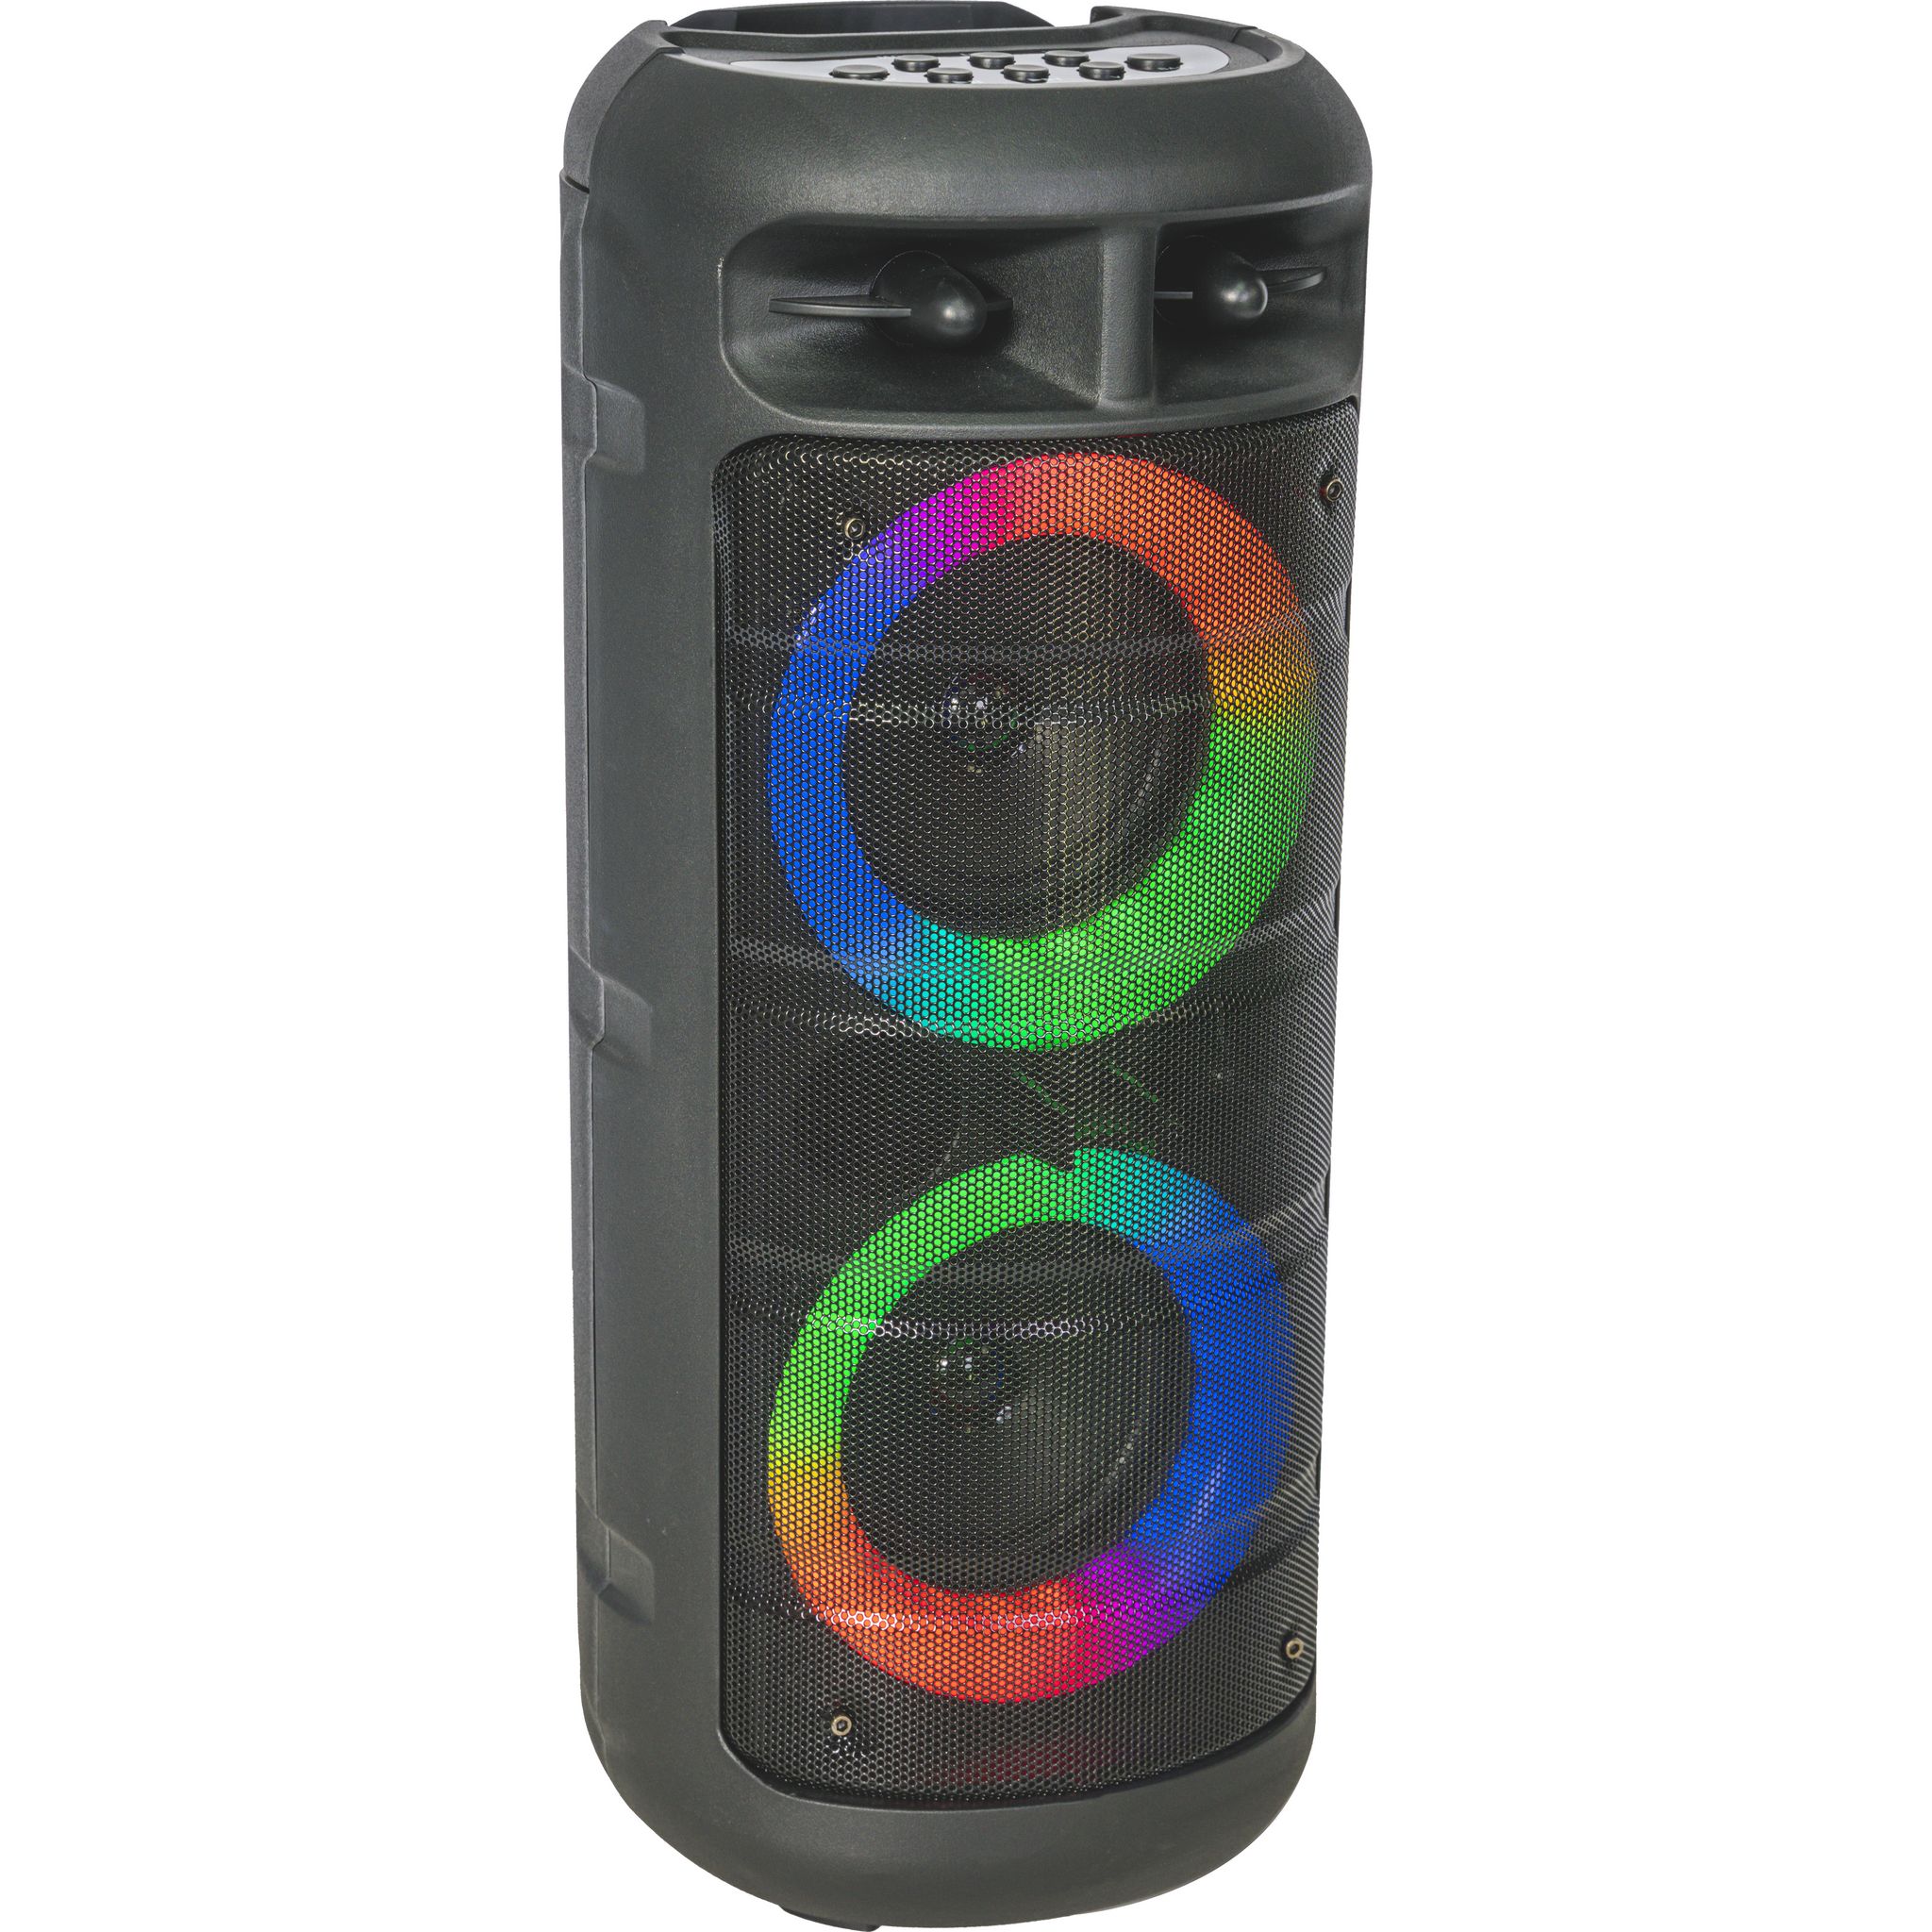 BOOST Enceinte portable Bluetooth - Noir - 12RGB-700 pas cher